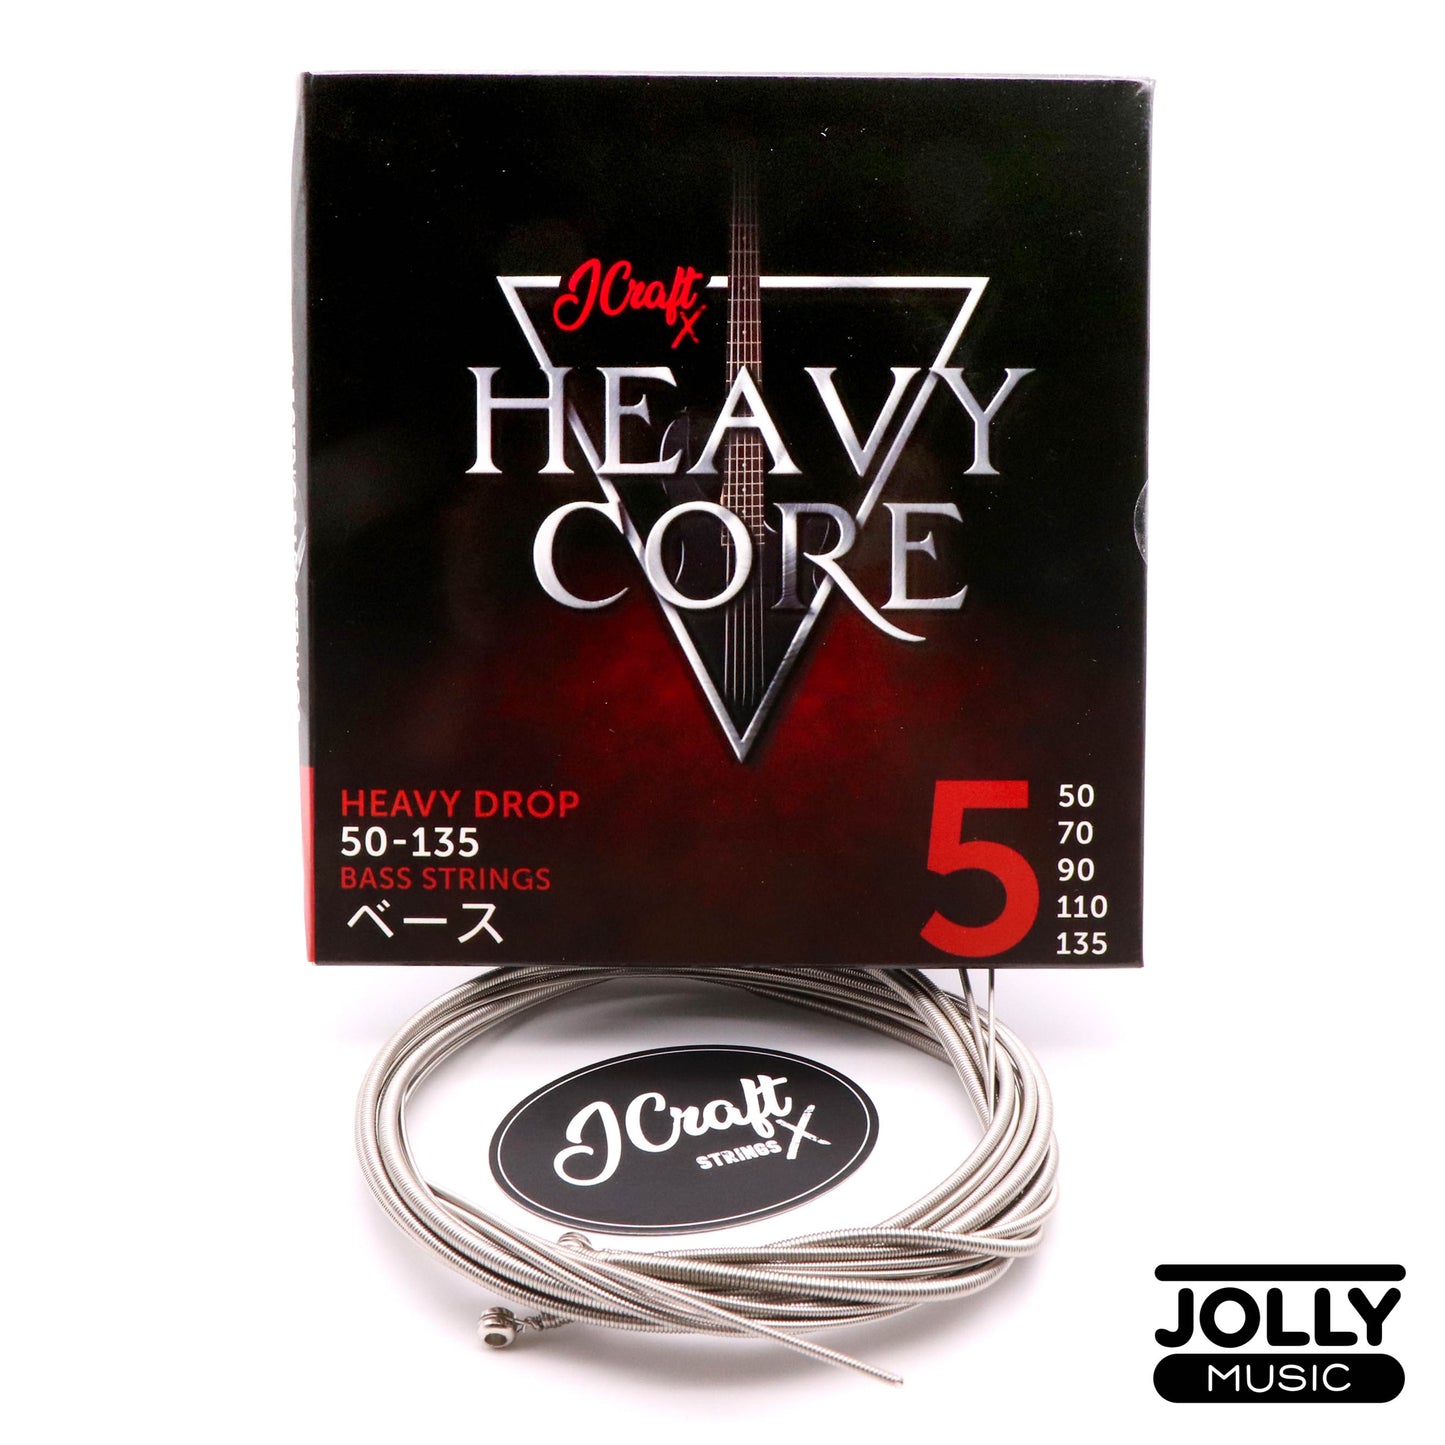 JCraft X Heavy Core 5-String Electric Bass Guitar String 50-135